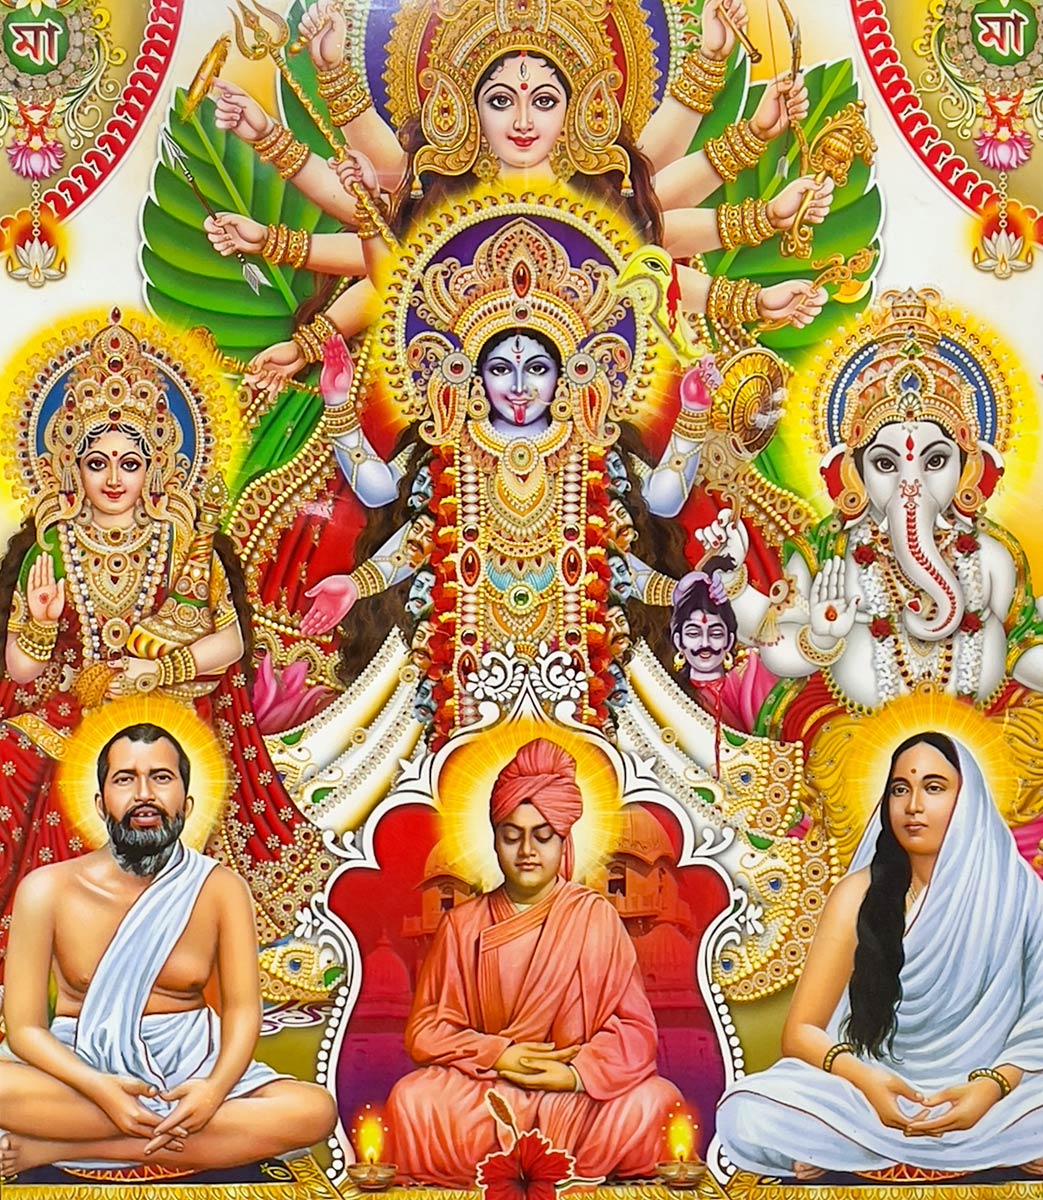 Cartaz mostrando a Deusa Tara com Ganesh, Sri Ramakrishna, Vivekananda e Sarada Devi, Templo Ma Tara, Tarapeeth